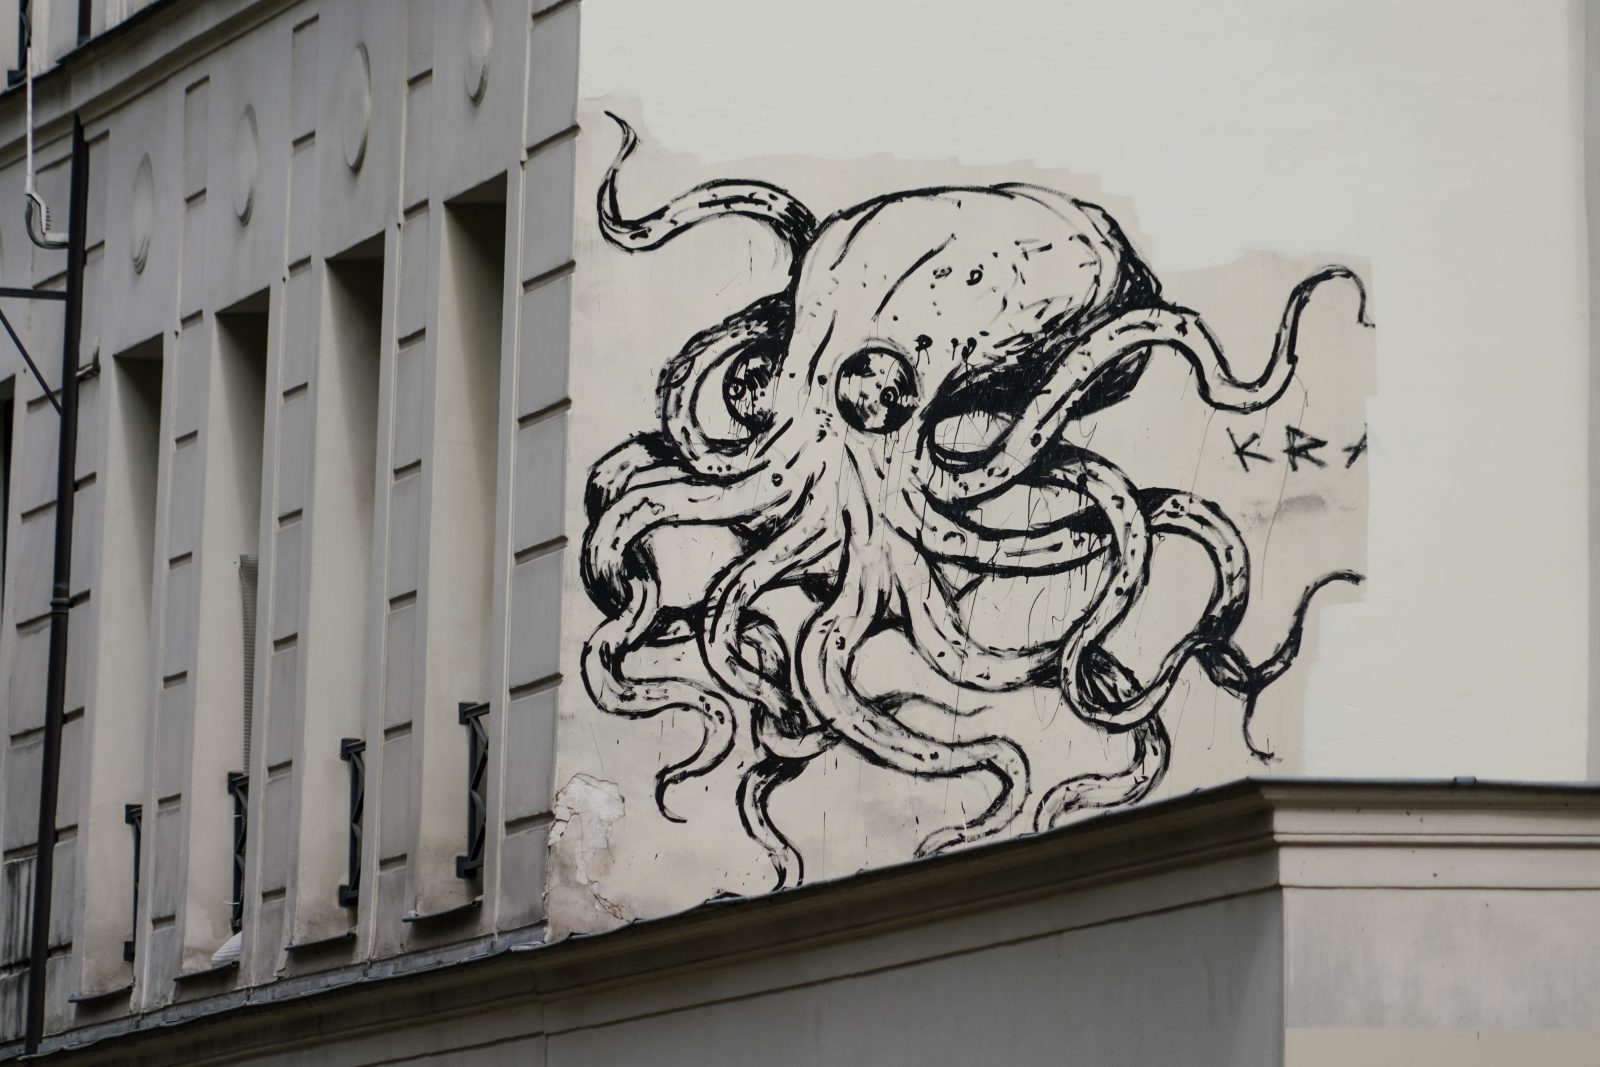 Street art graffiti depicting a giant octopus by artist Kraken